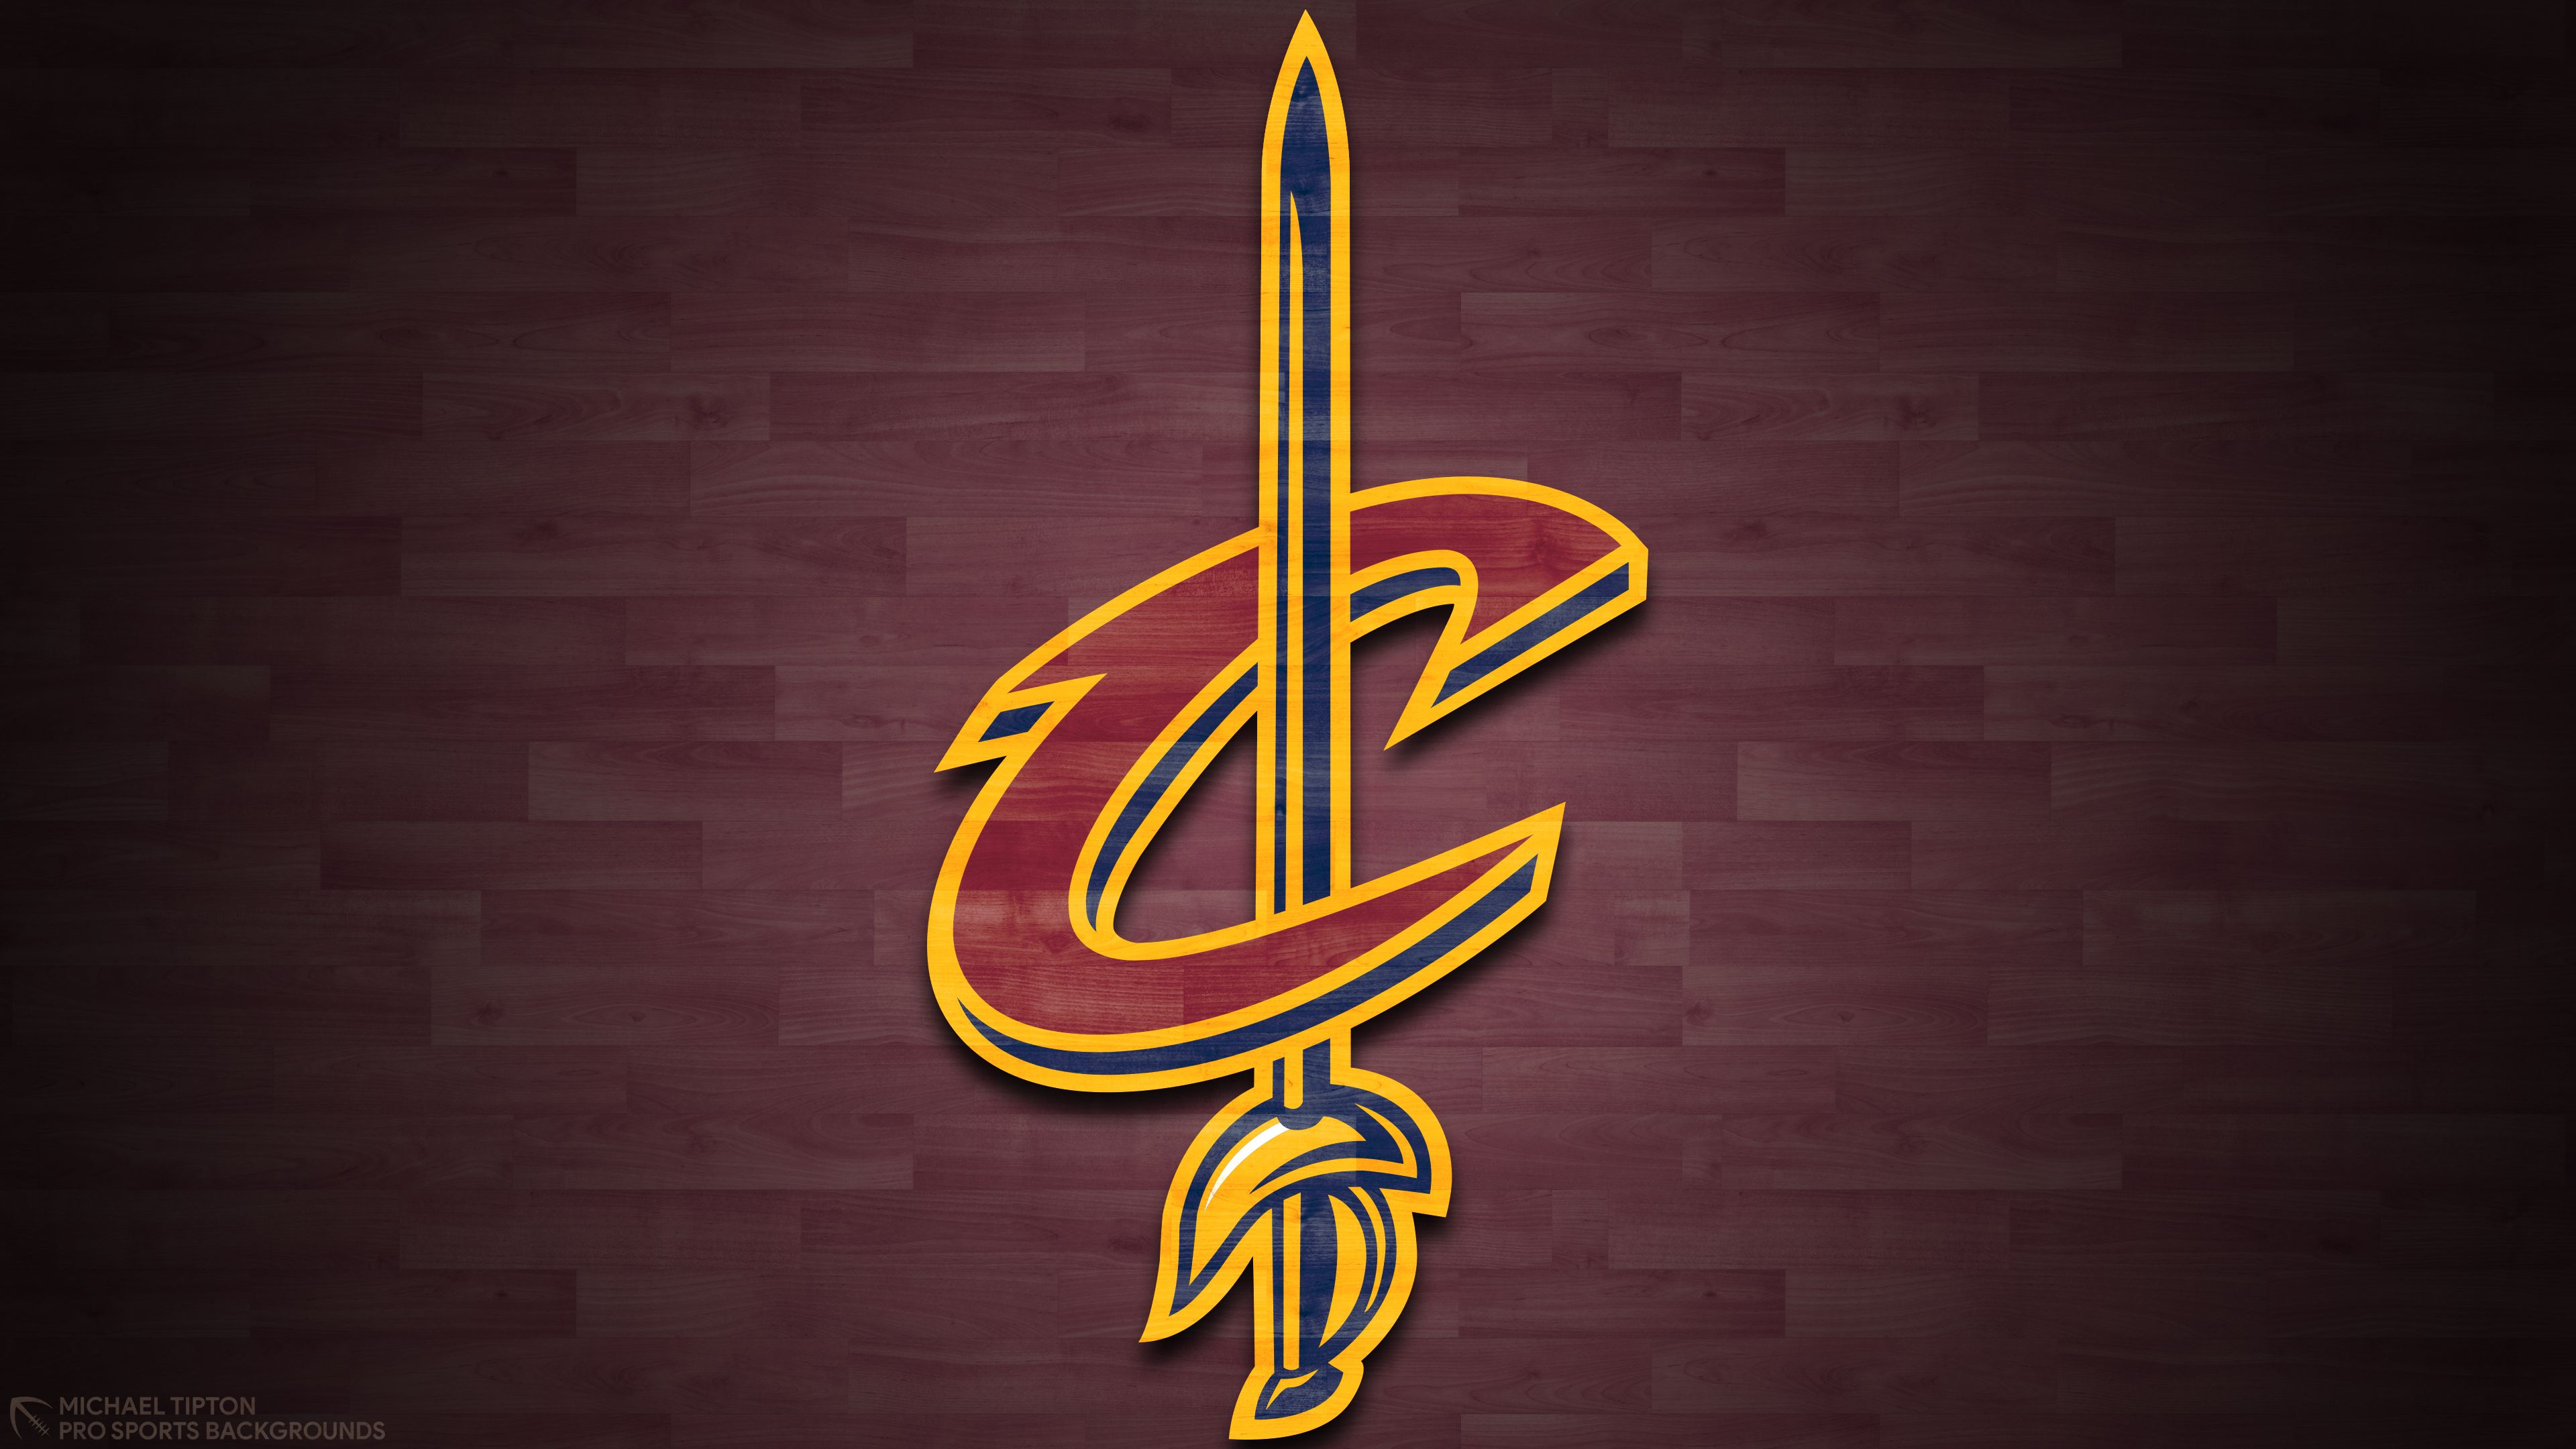 sports, cleveland cavaliers, basketball, logo, nba